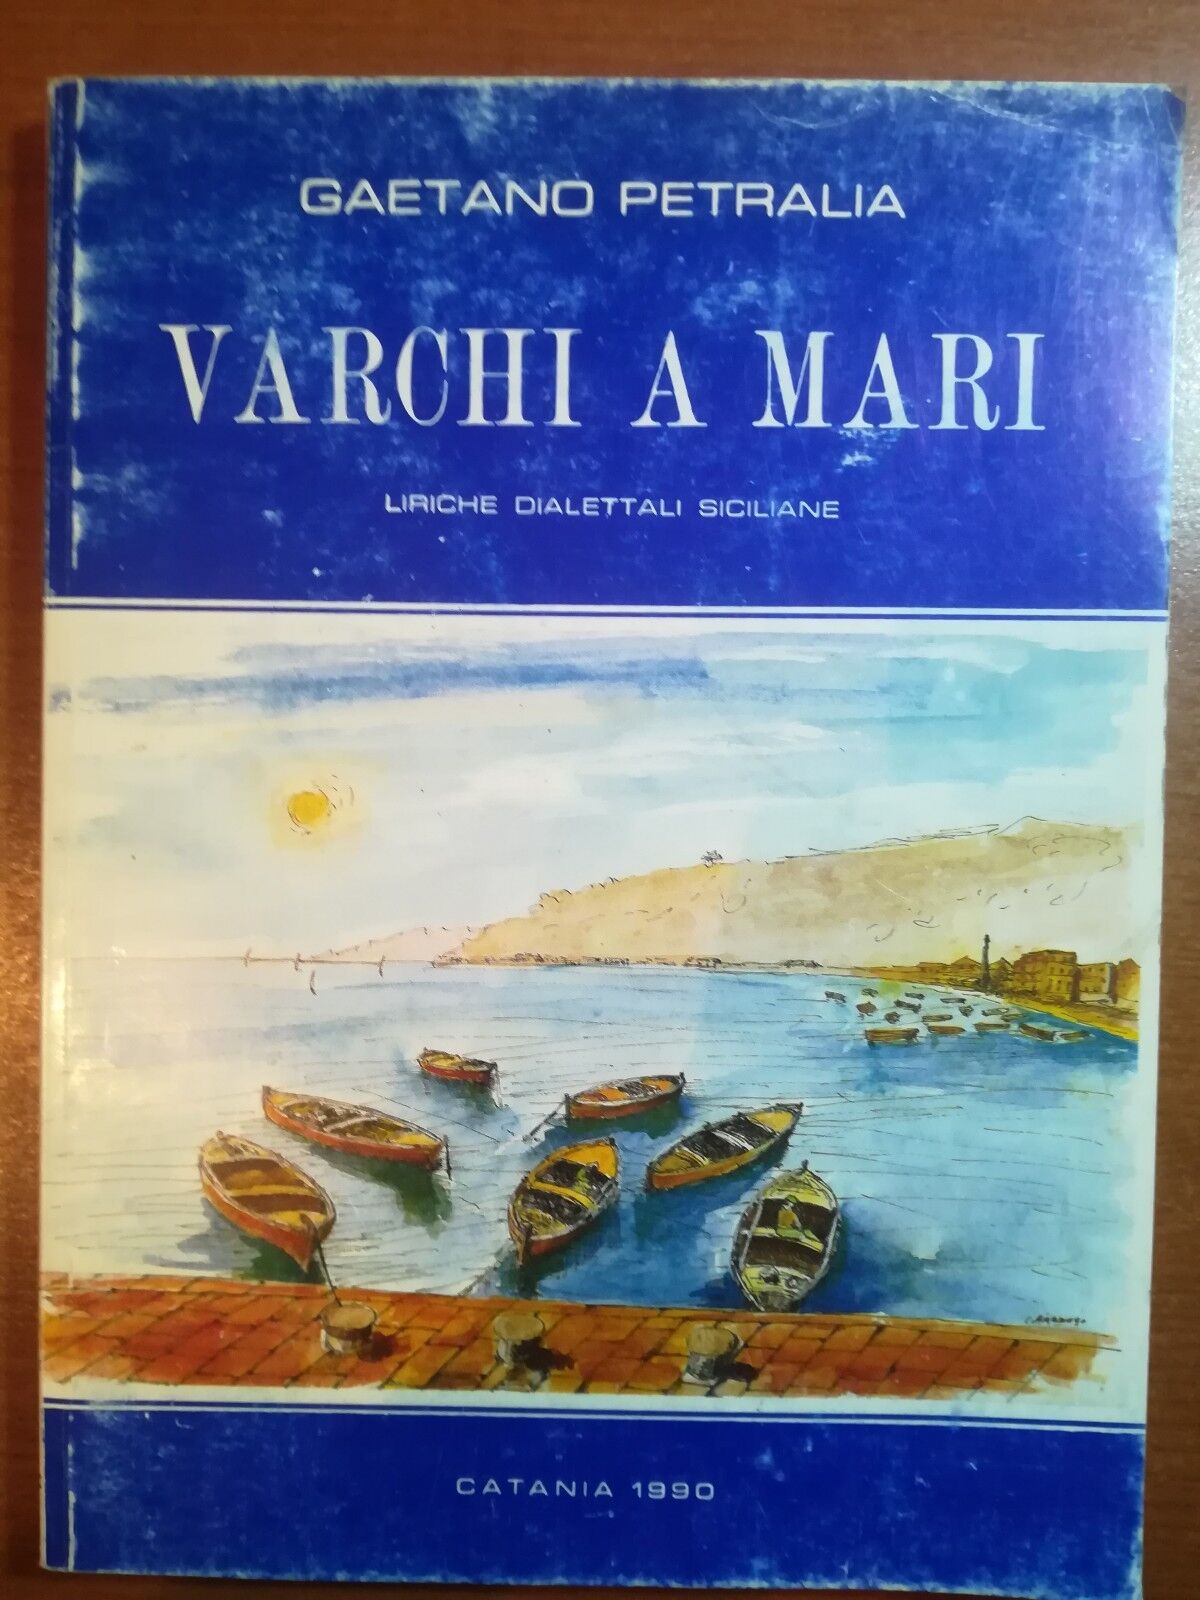 Varchi a mare - Gaetano Petralia - Catania - 1990 - M